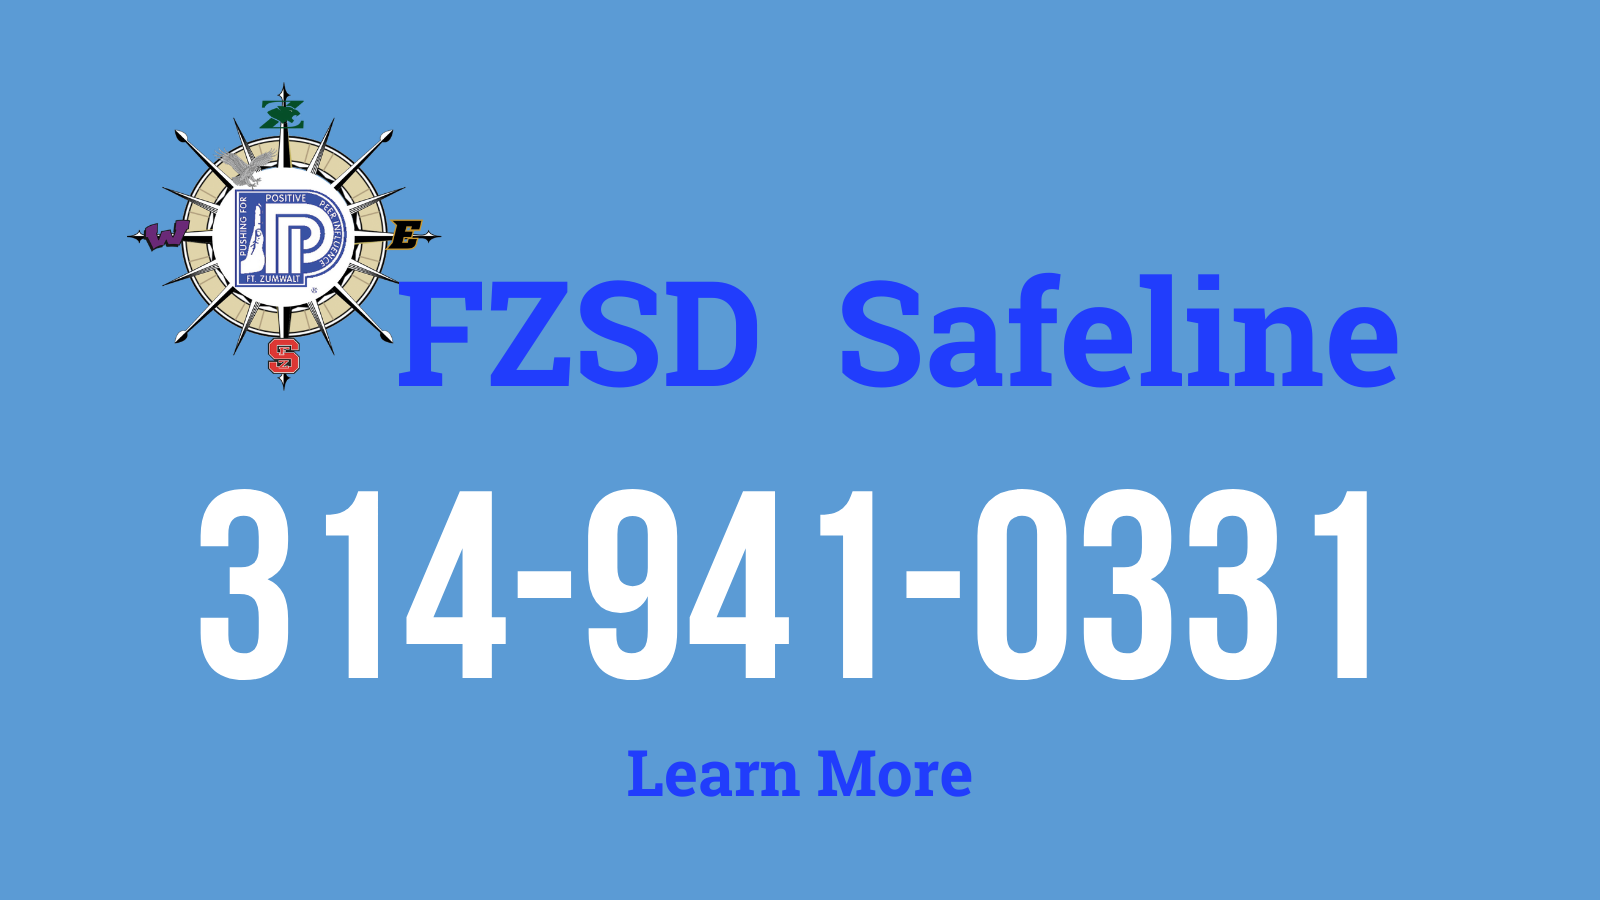 Safeline 314-941-0331